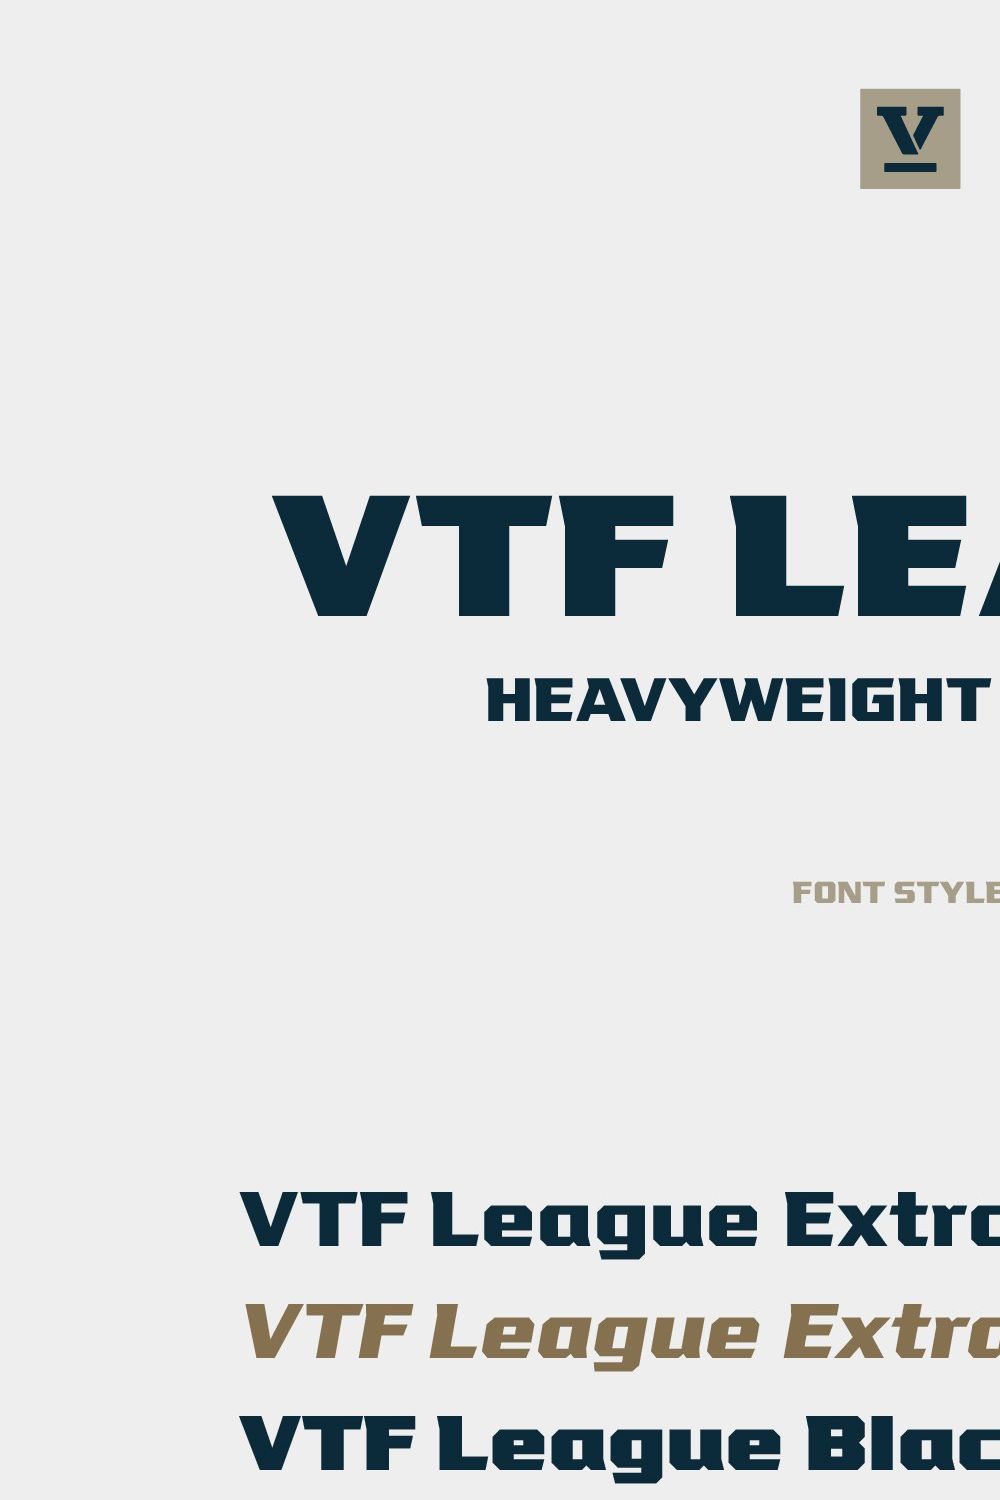 VTF League – Heavyweights pinterest preview image.